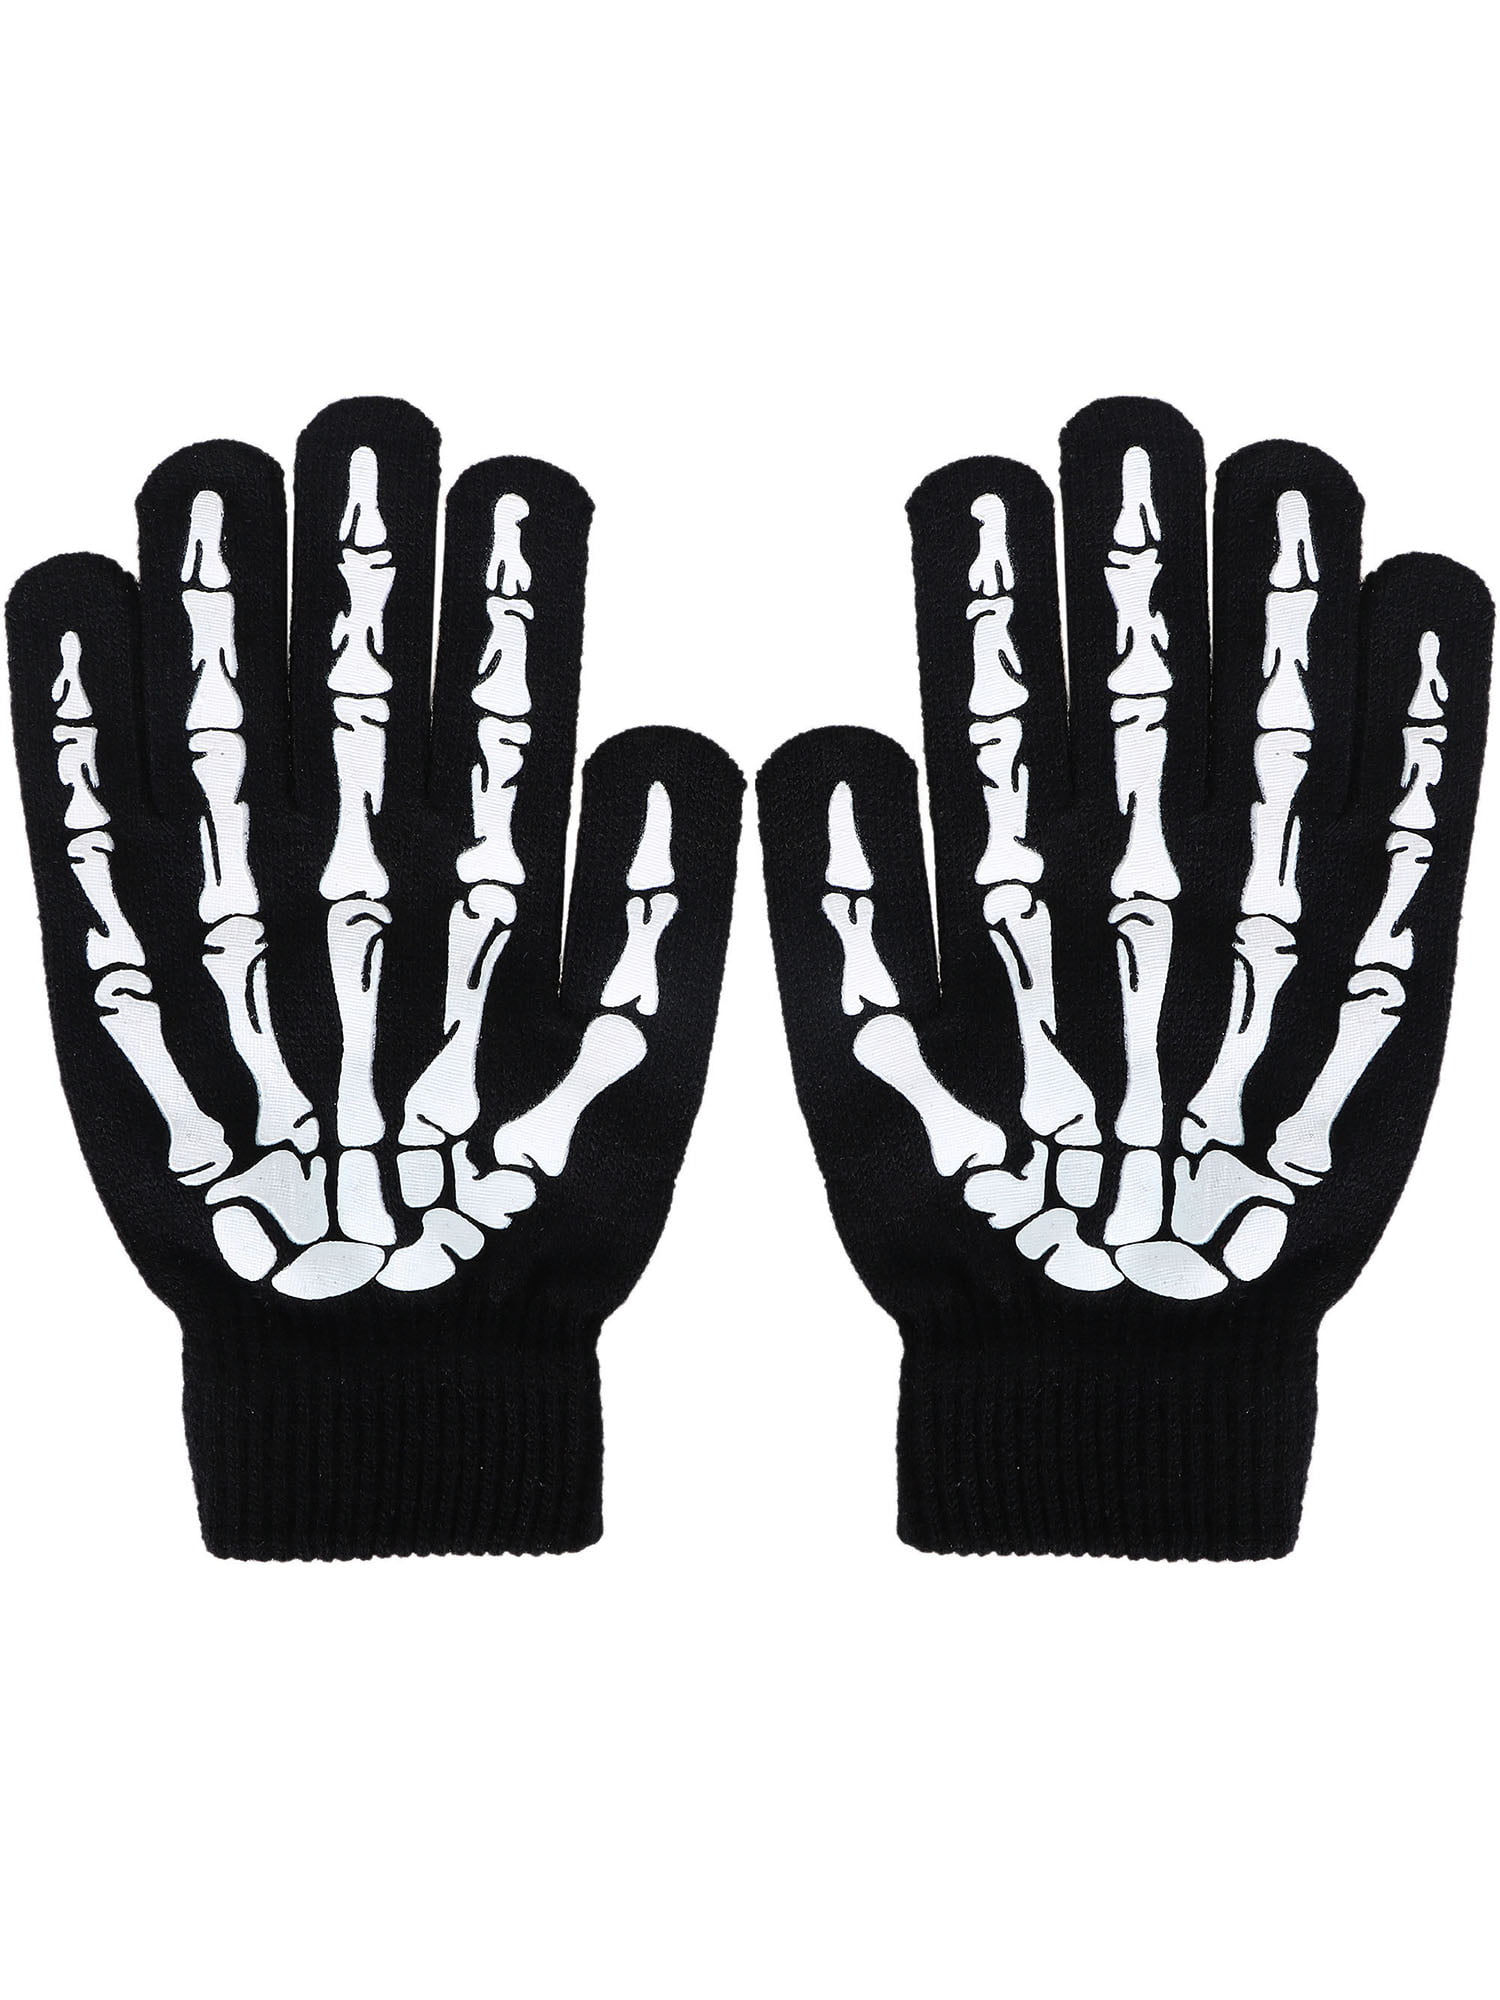 KODORIA Halloween Long Gloves Skeleton Bone Gloves Full Finger Gloves for Halloween Party Fancy Dress Costume Accessories Black and White 